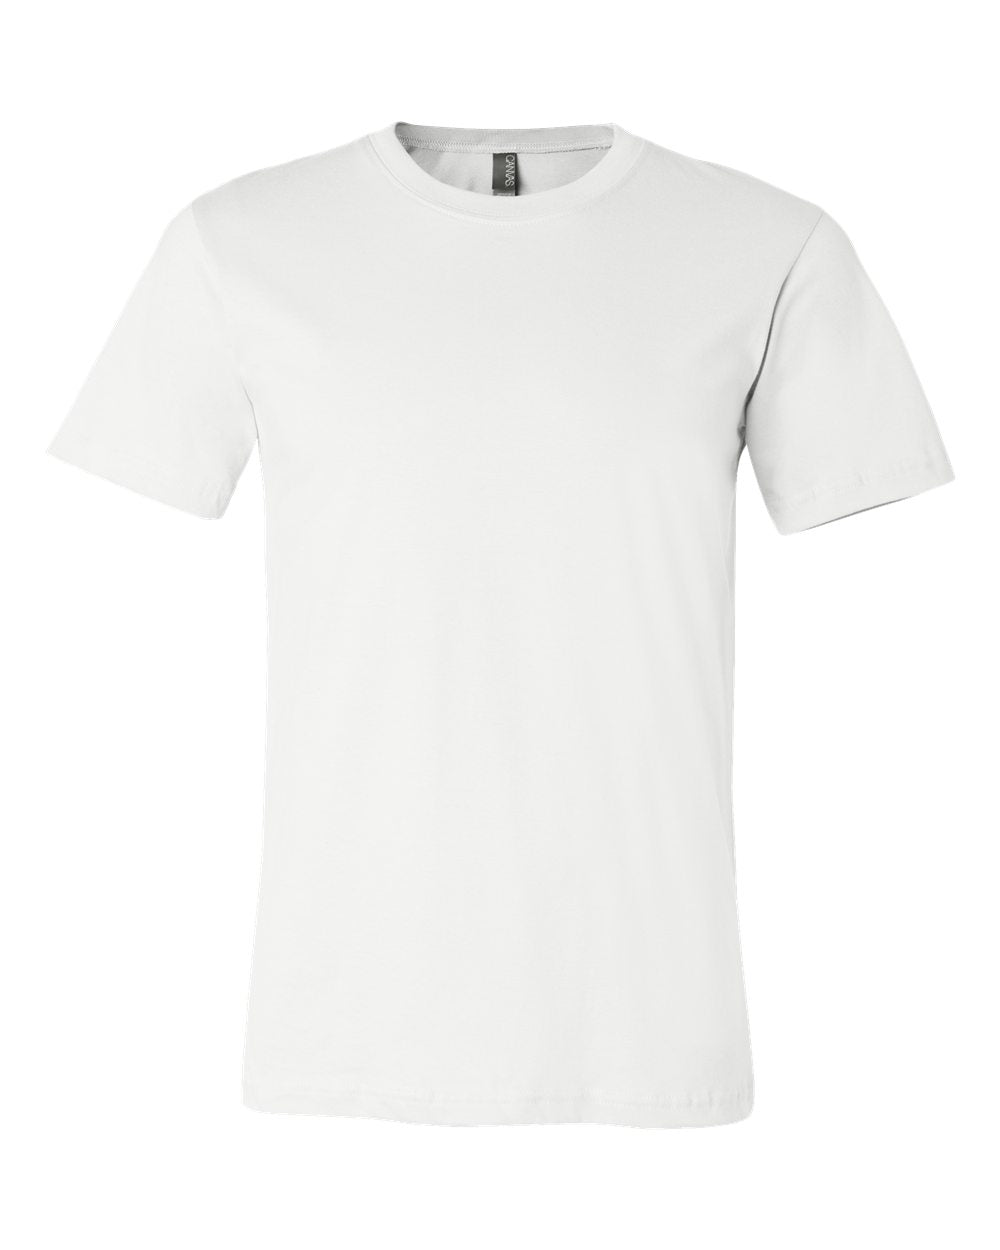 Vernon Football T-Shirt